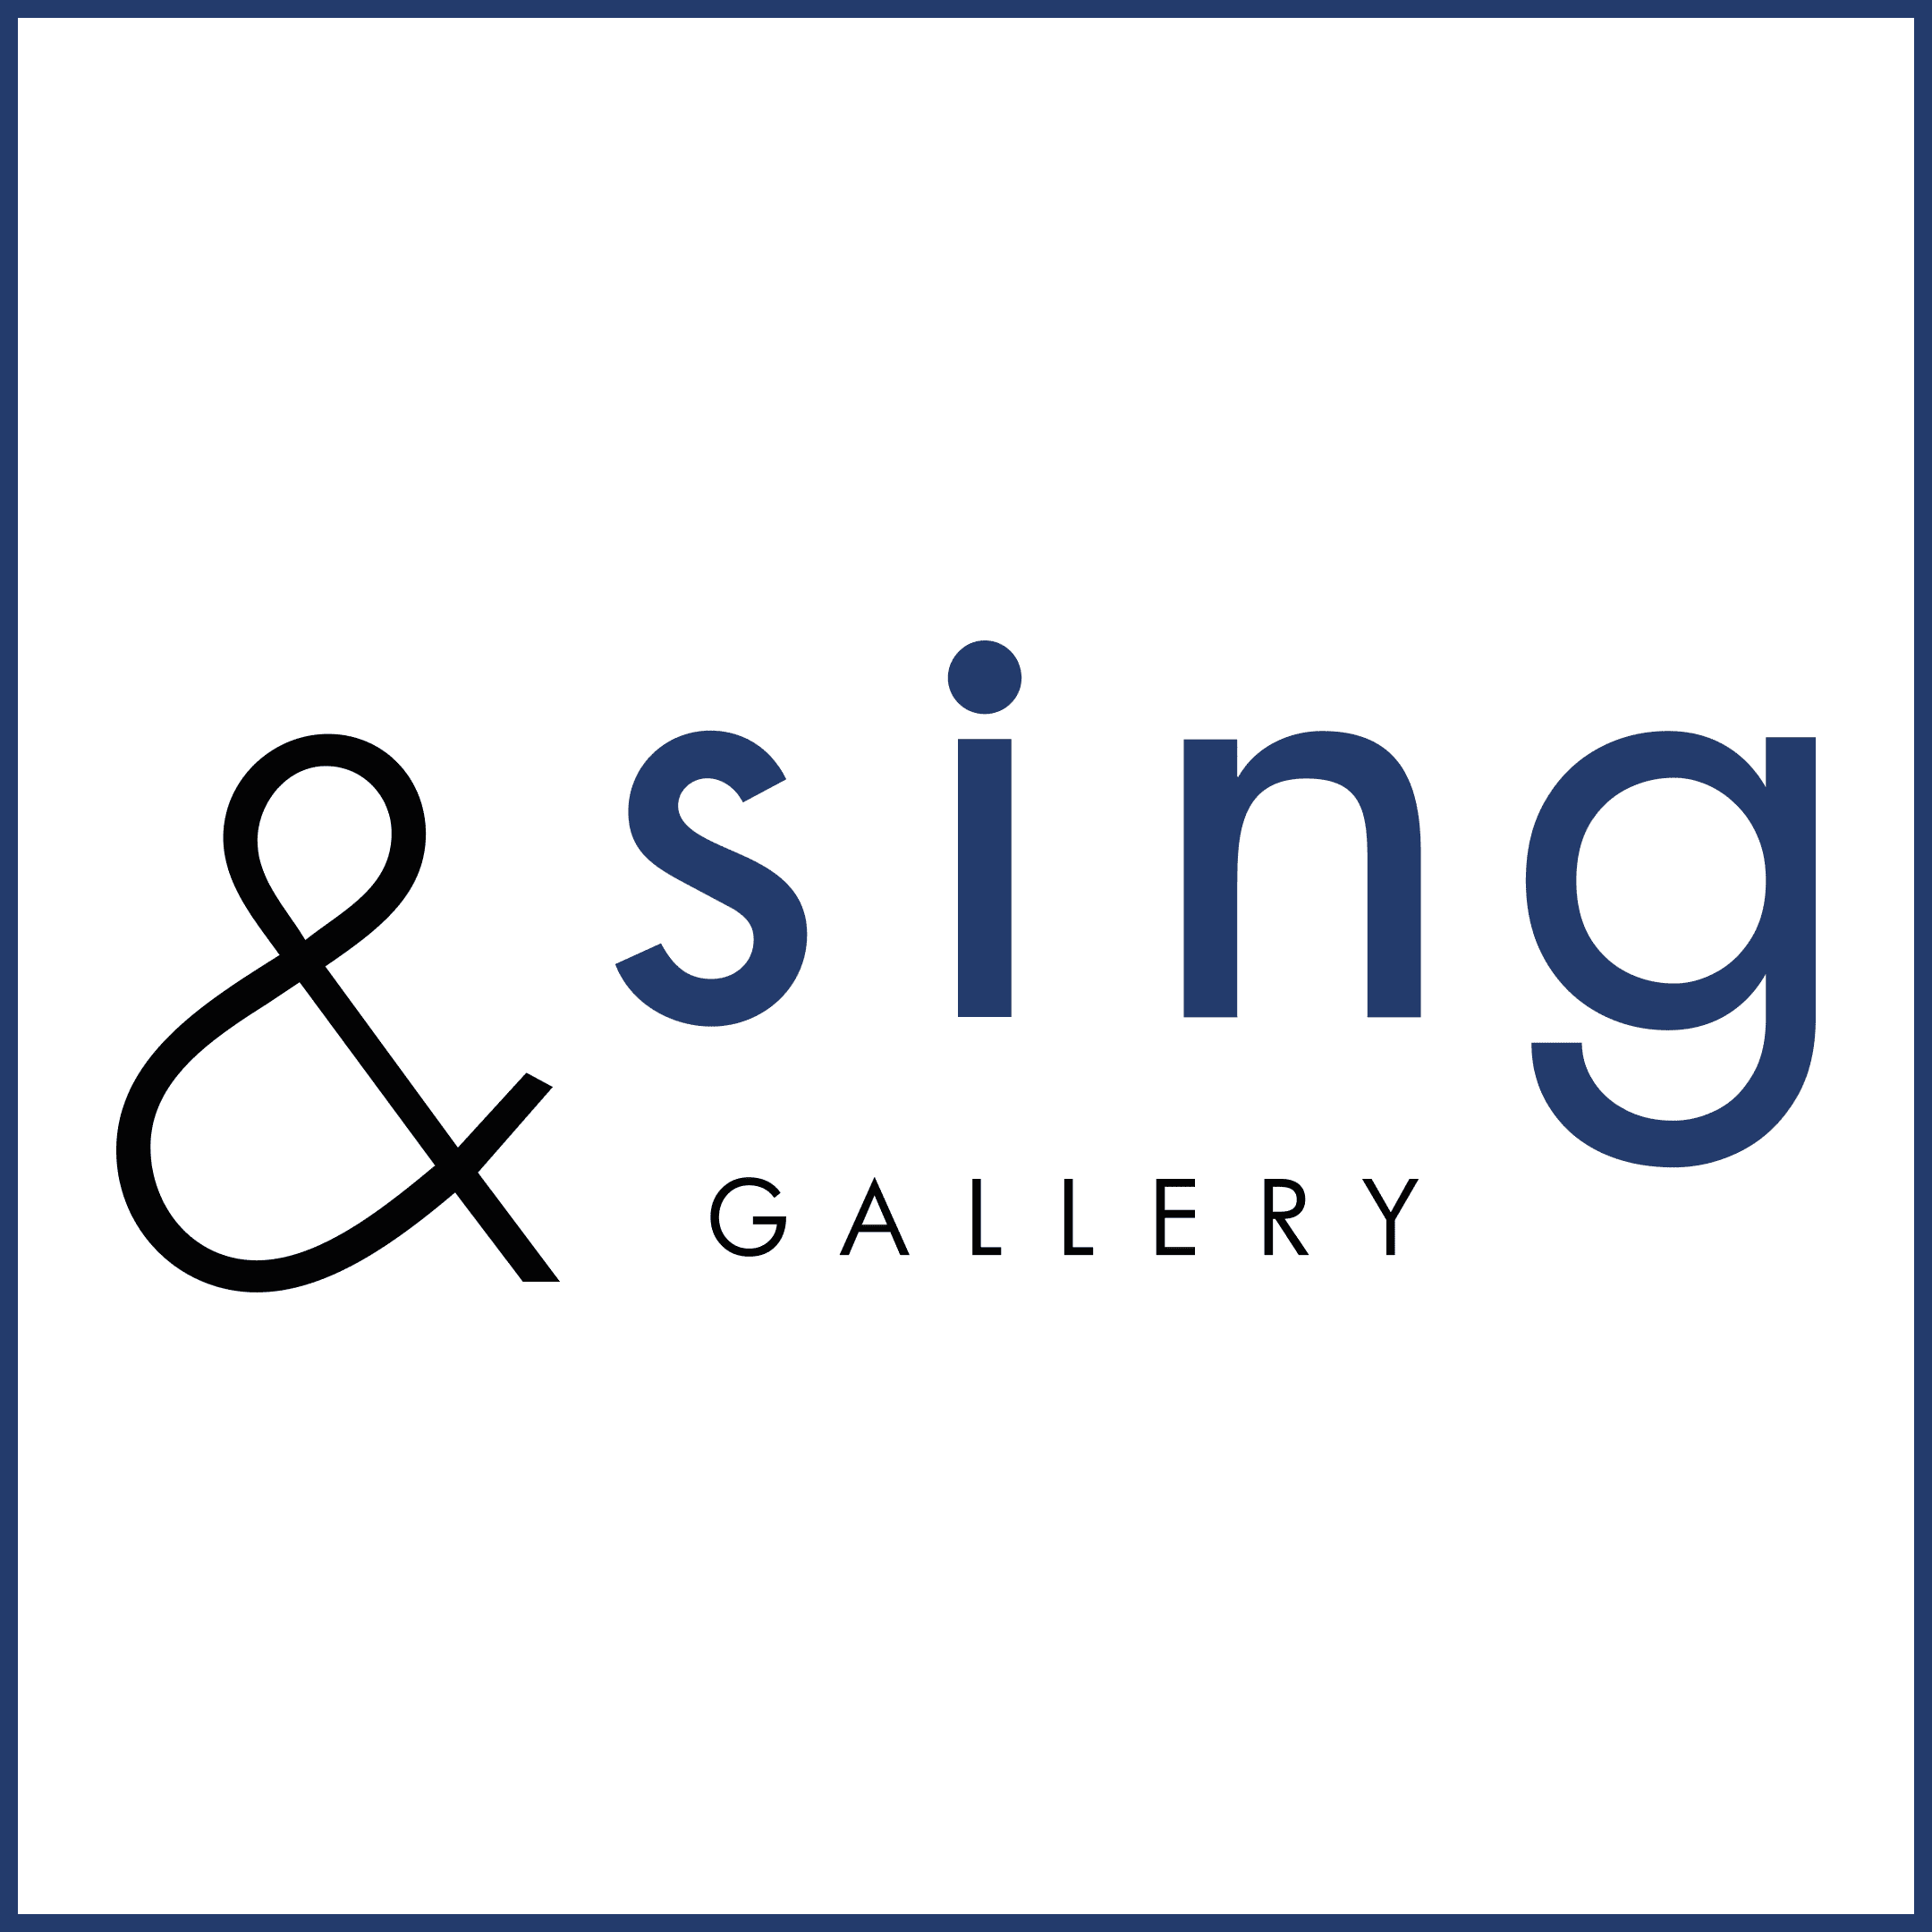 gallery &sing